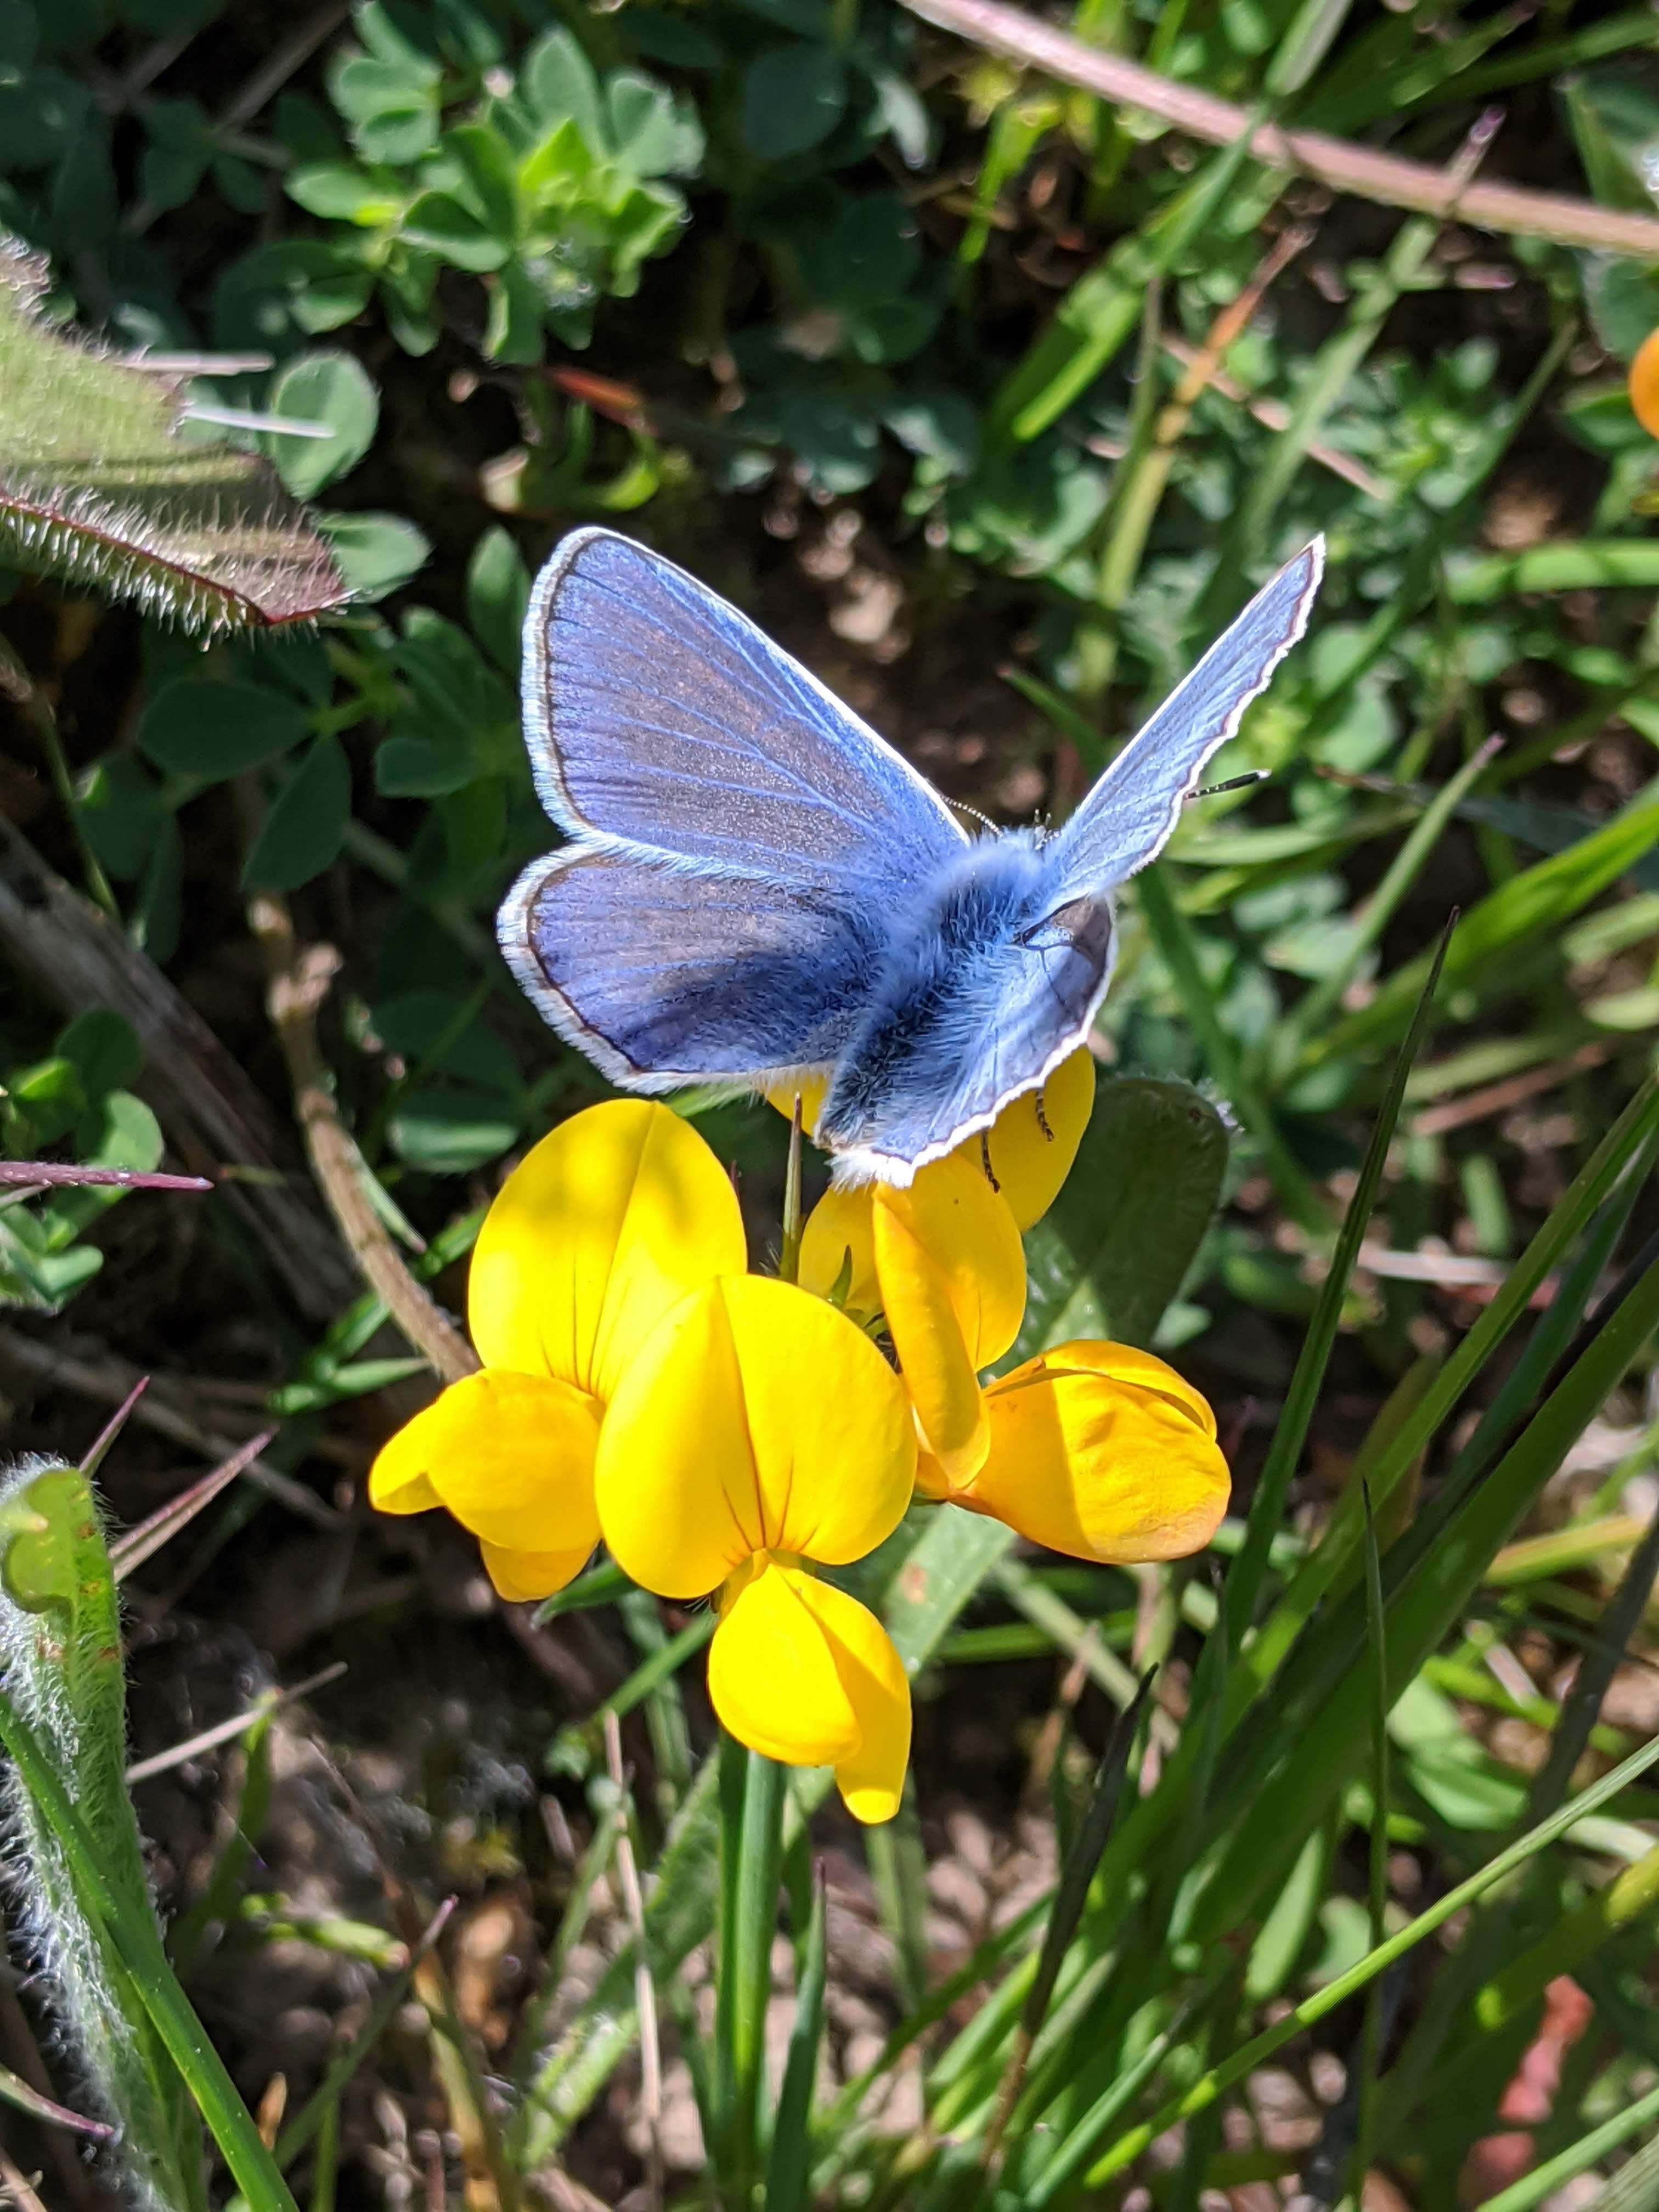 A common blue butterfly on bird's-foot trefoil flowers